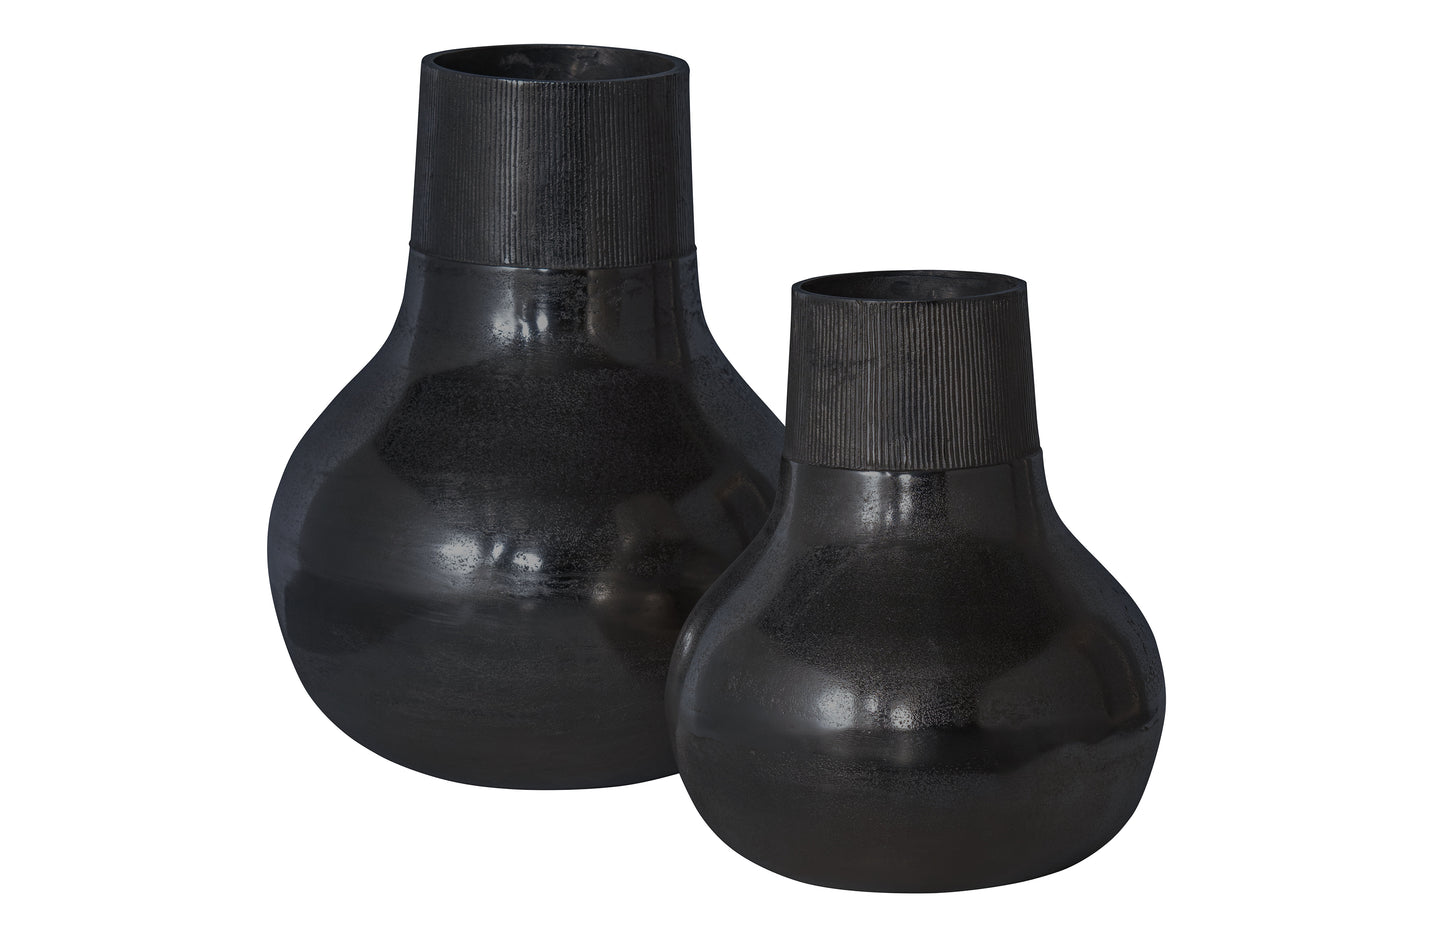 Metal L - Vase, Metal Sort